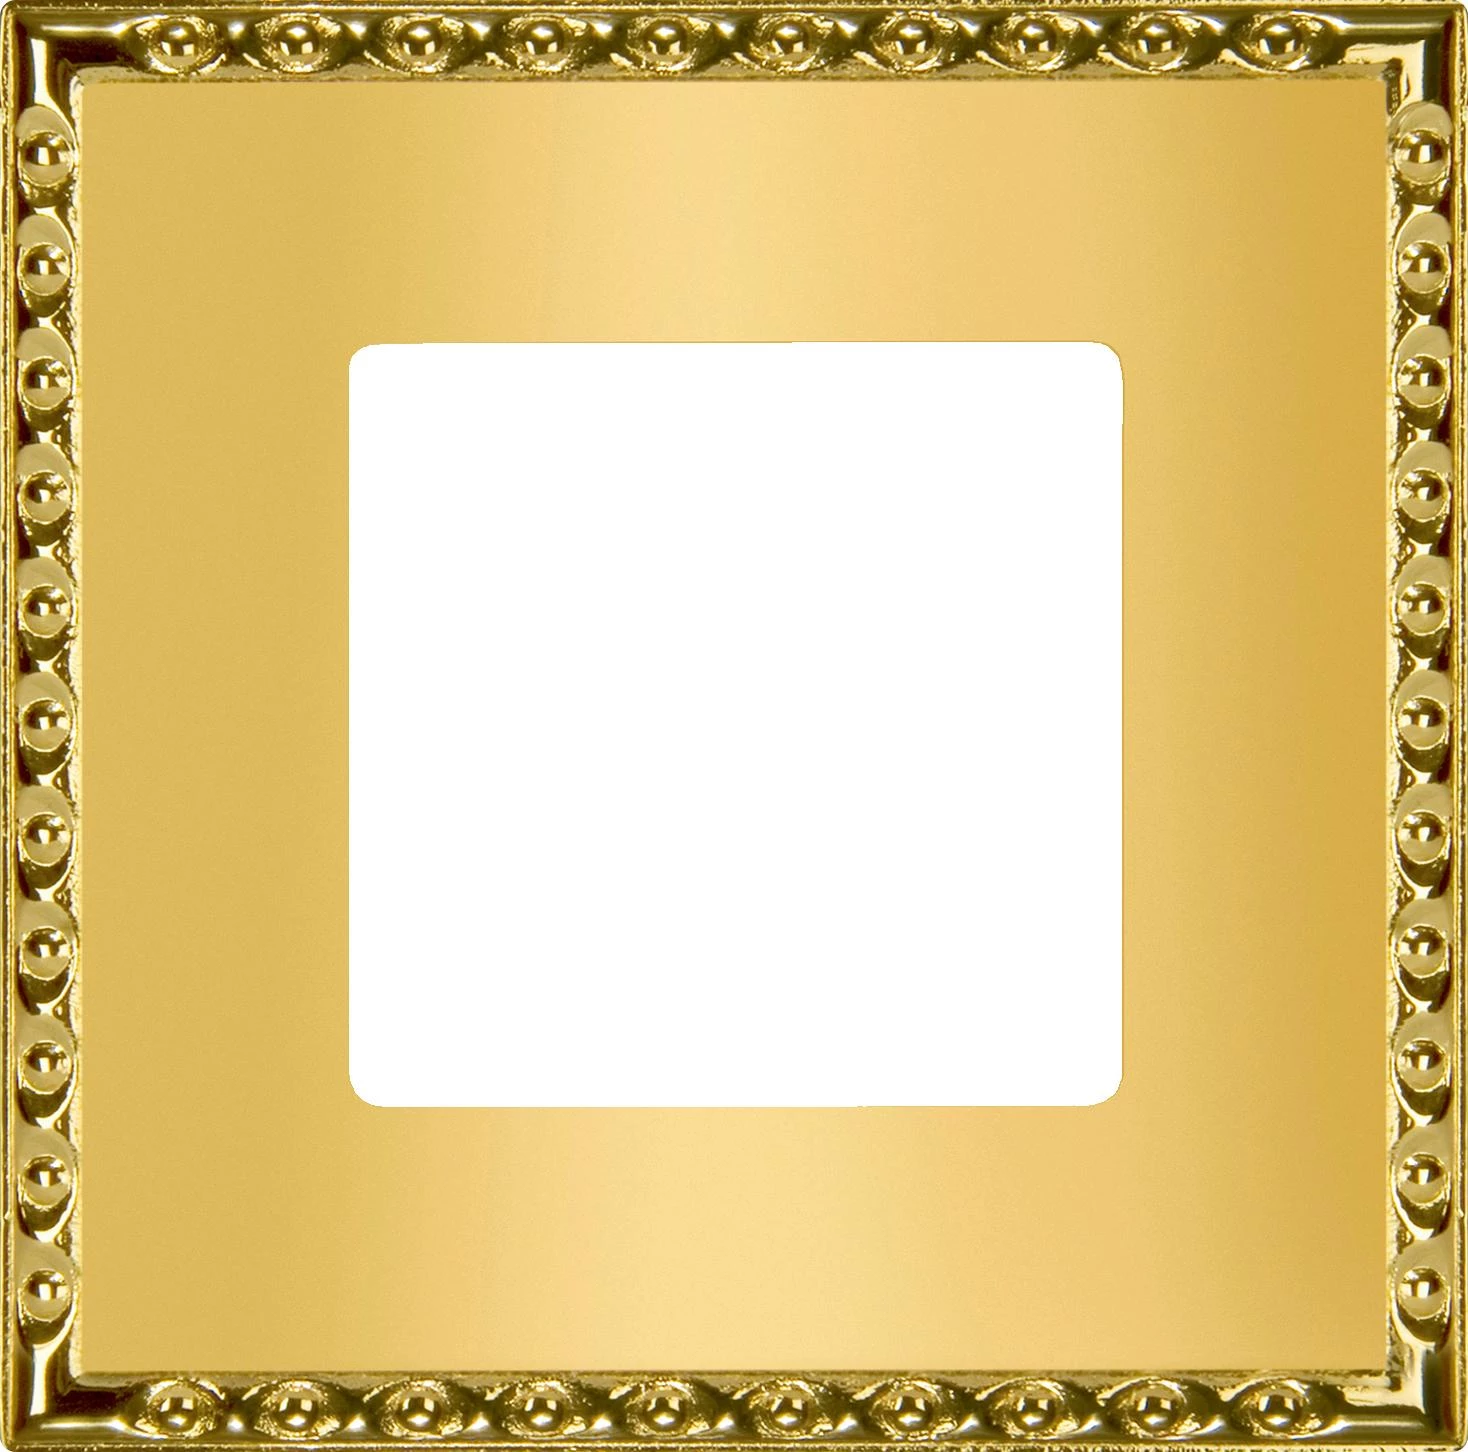  артикул FD01211OR название Рамка 1-ая (одинарная), цвет Красное золото, Toledo, Fede